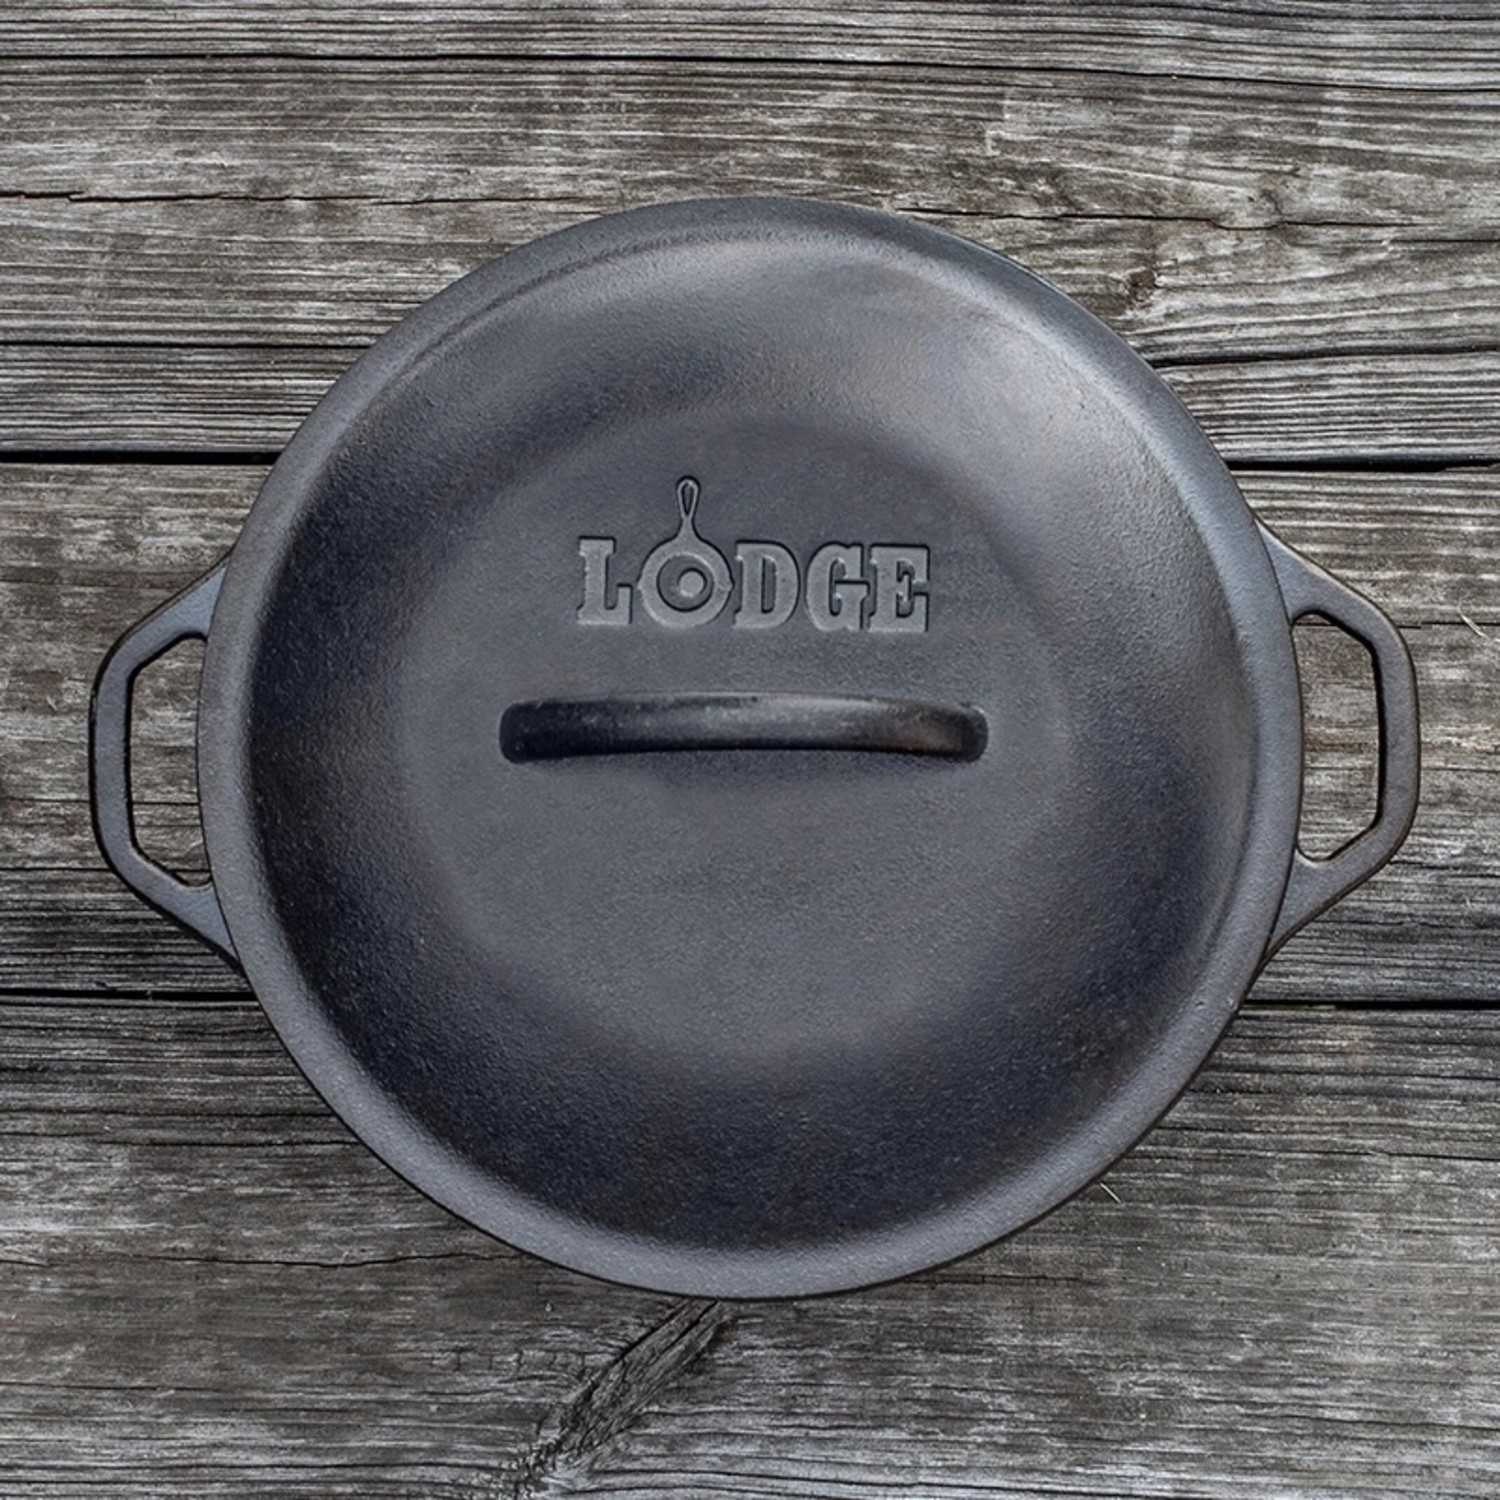 Lodge Lodge 5 quart Round Pre-Seasoned Cast Iron Dutch Oven